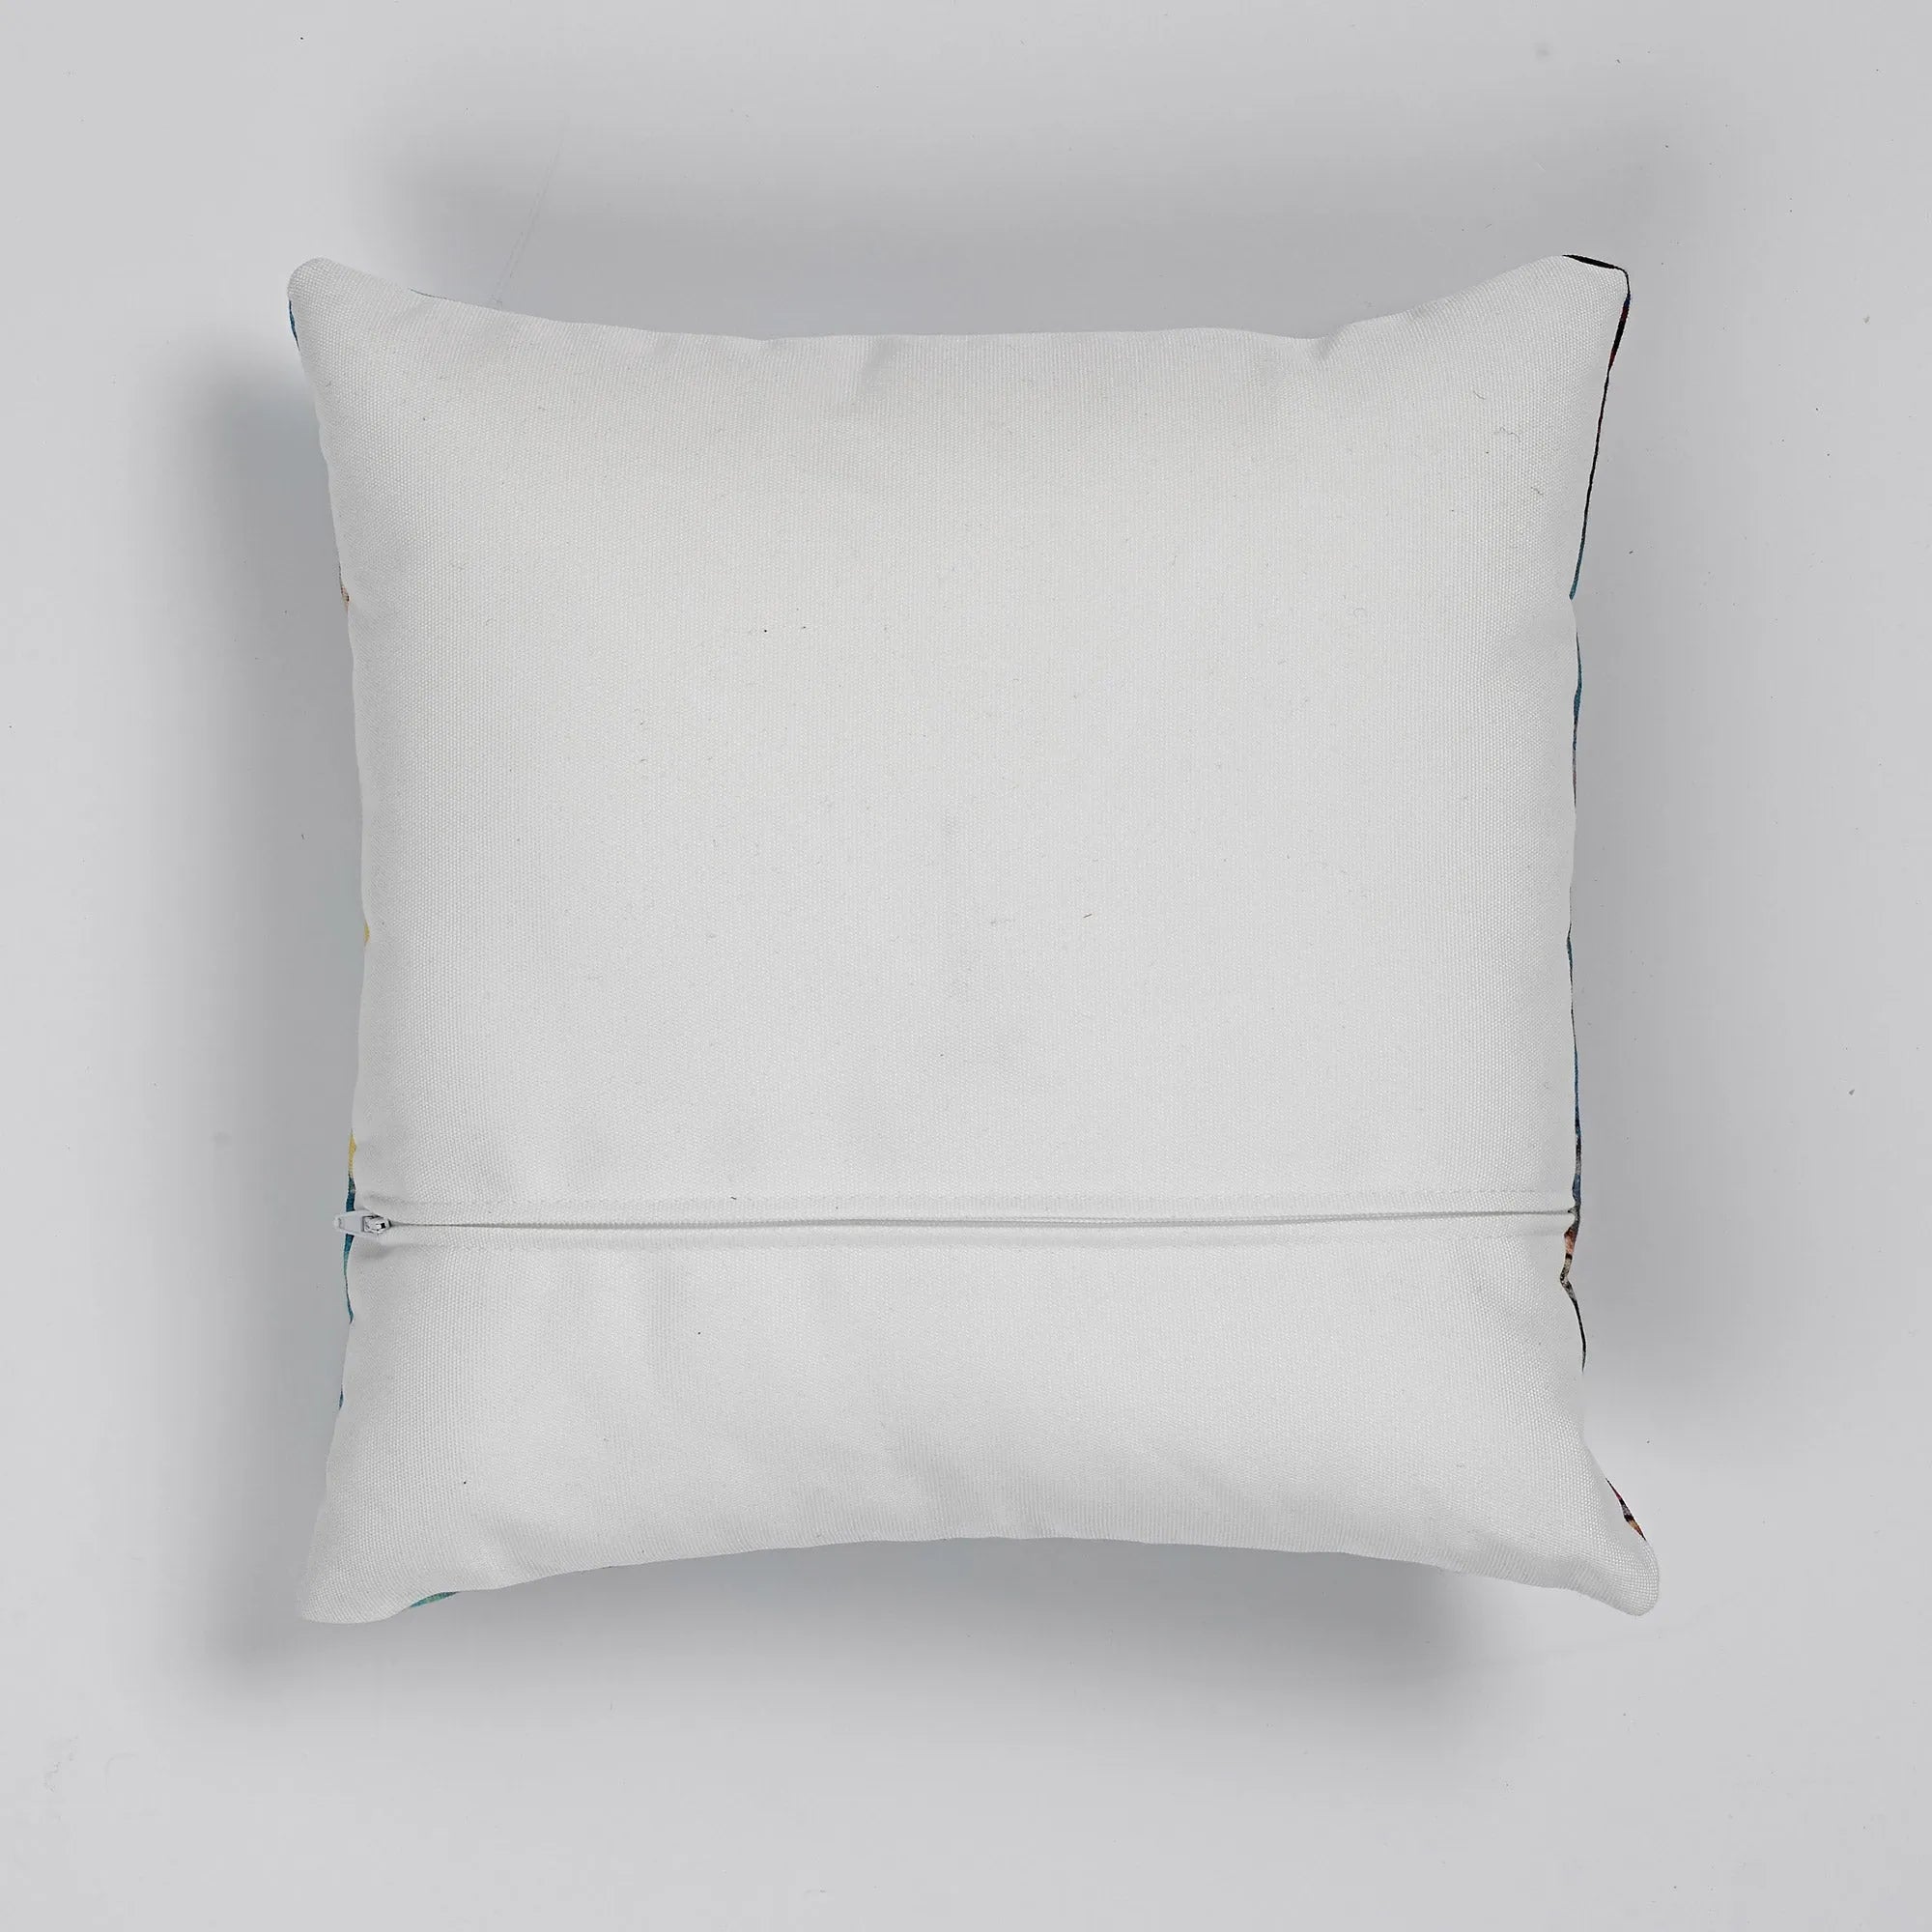 Wisteria From Momoyogusa By Kamisaka Sekka Cushion - Throw Pillows - Aesthetic Art